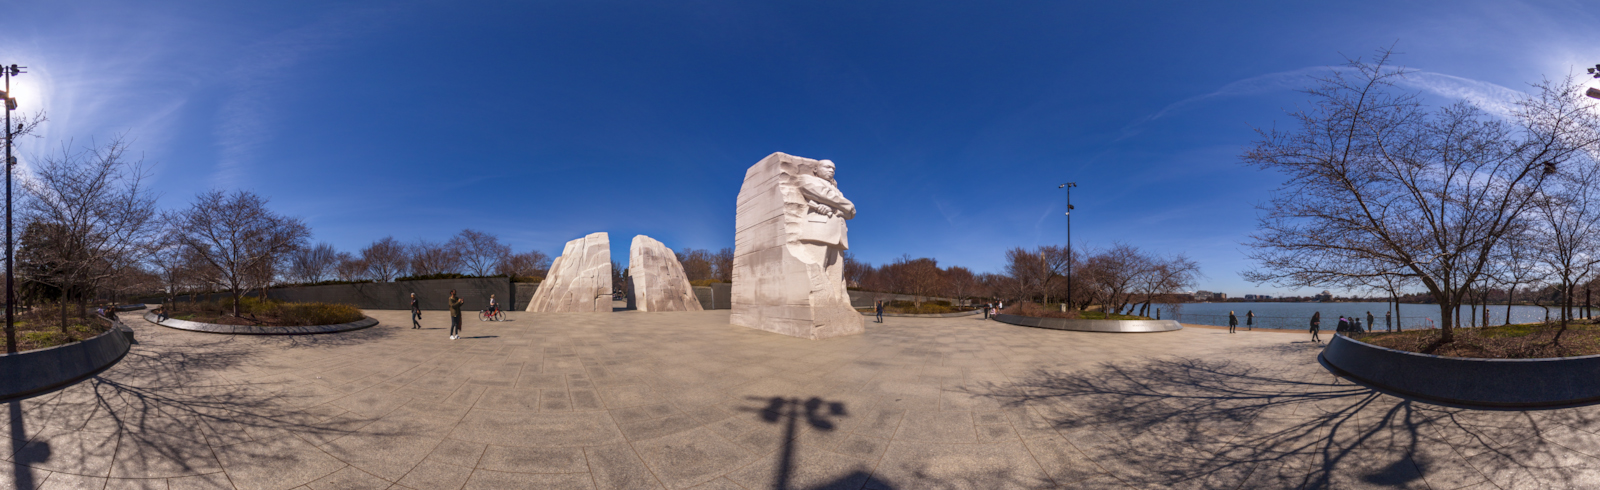 3D Rose Martin Luther King Jr Memorial-Washington Dc-Usa-Us09 Lfo0141-Lee Foster Towel 15 x 22 